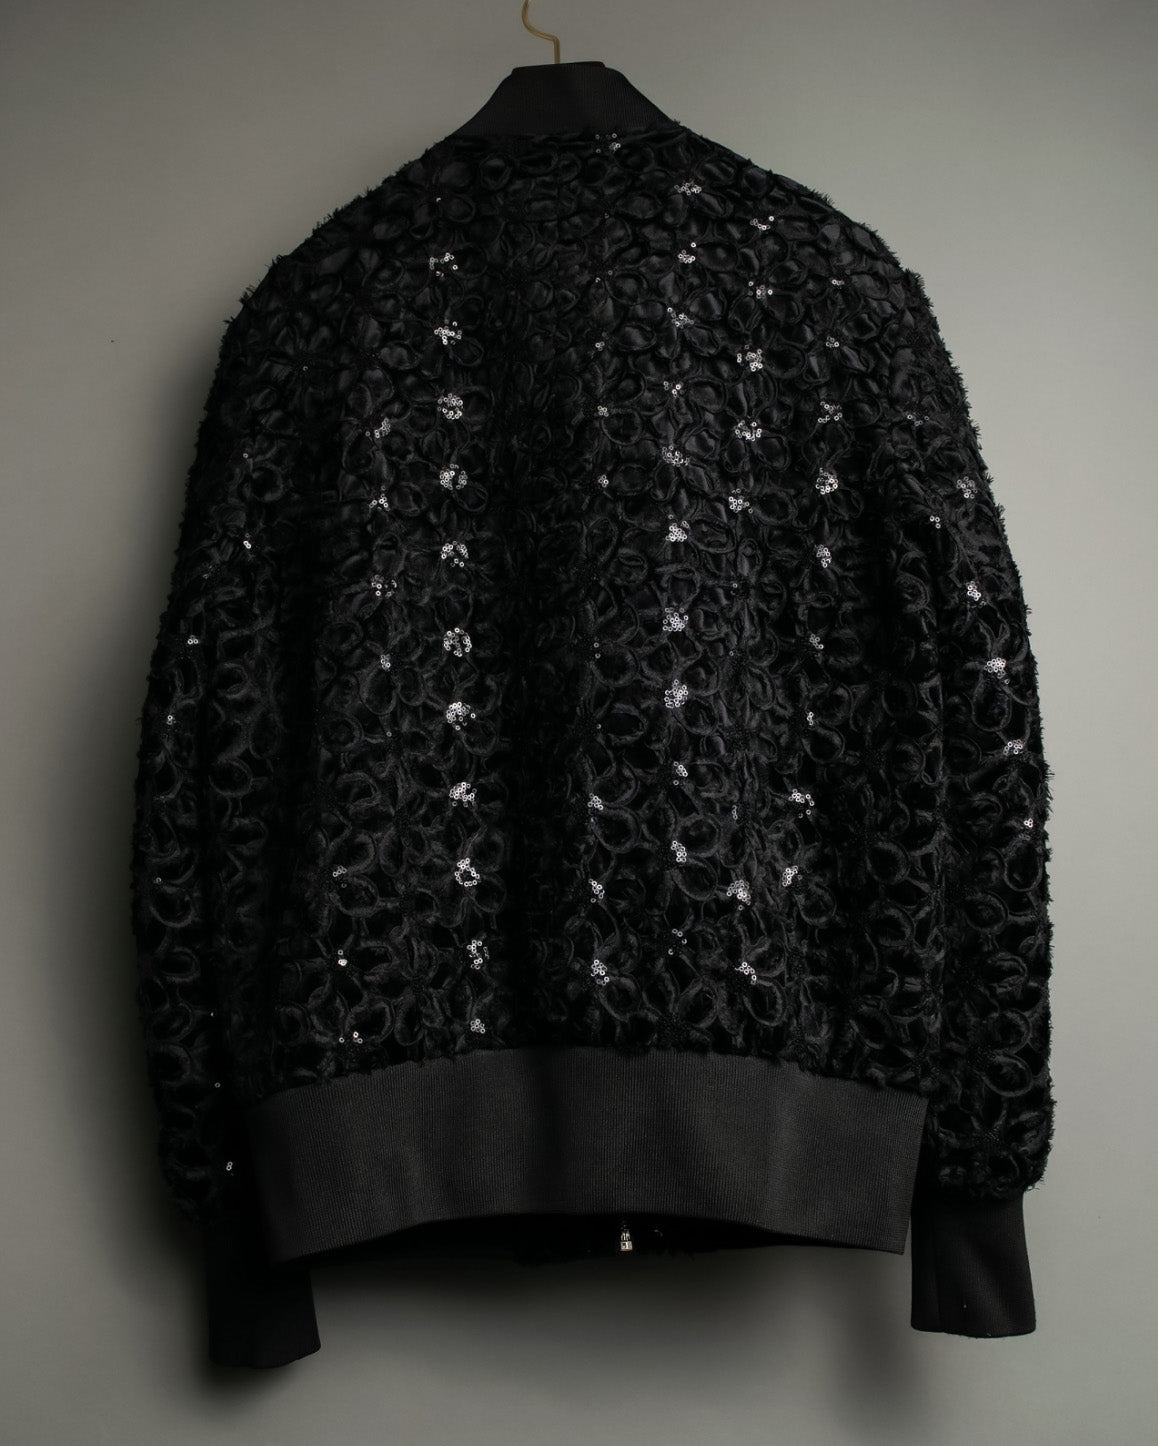 Black Sequin Fabric Jacket